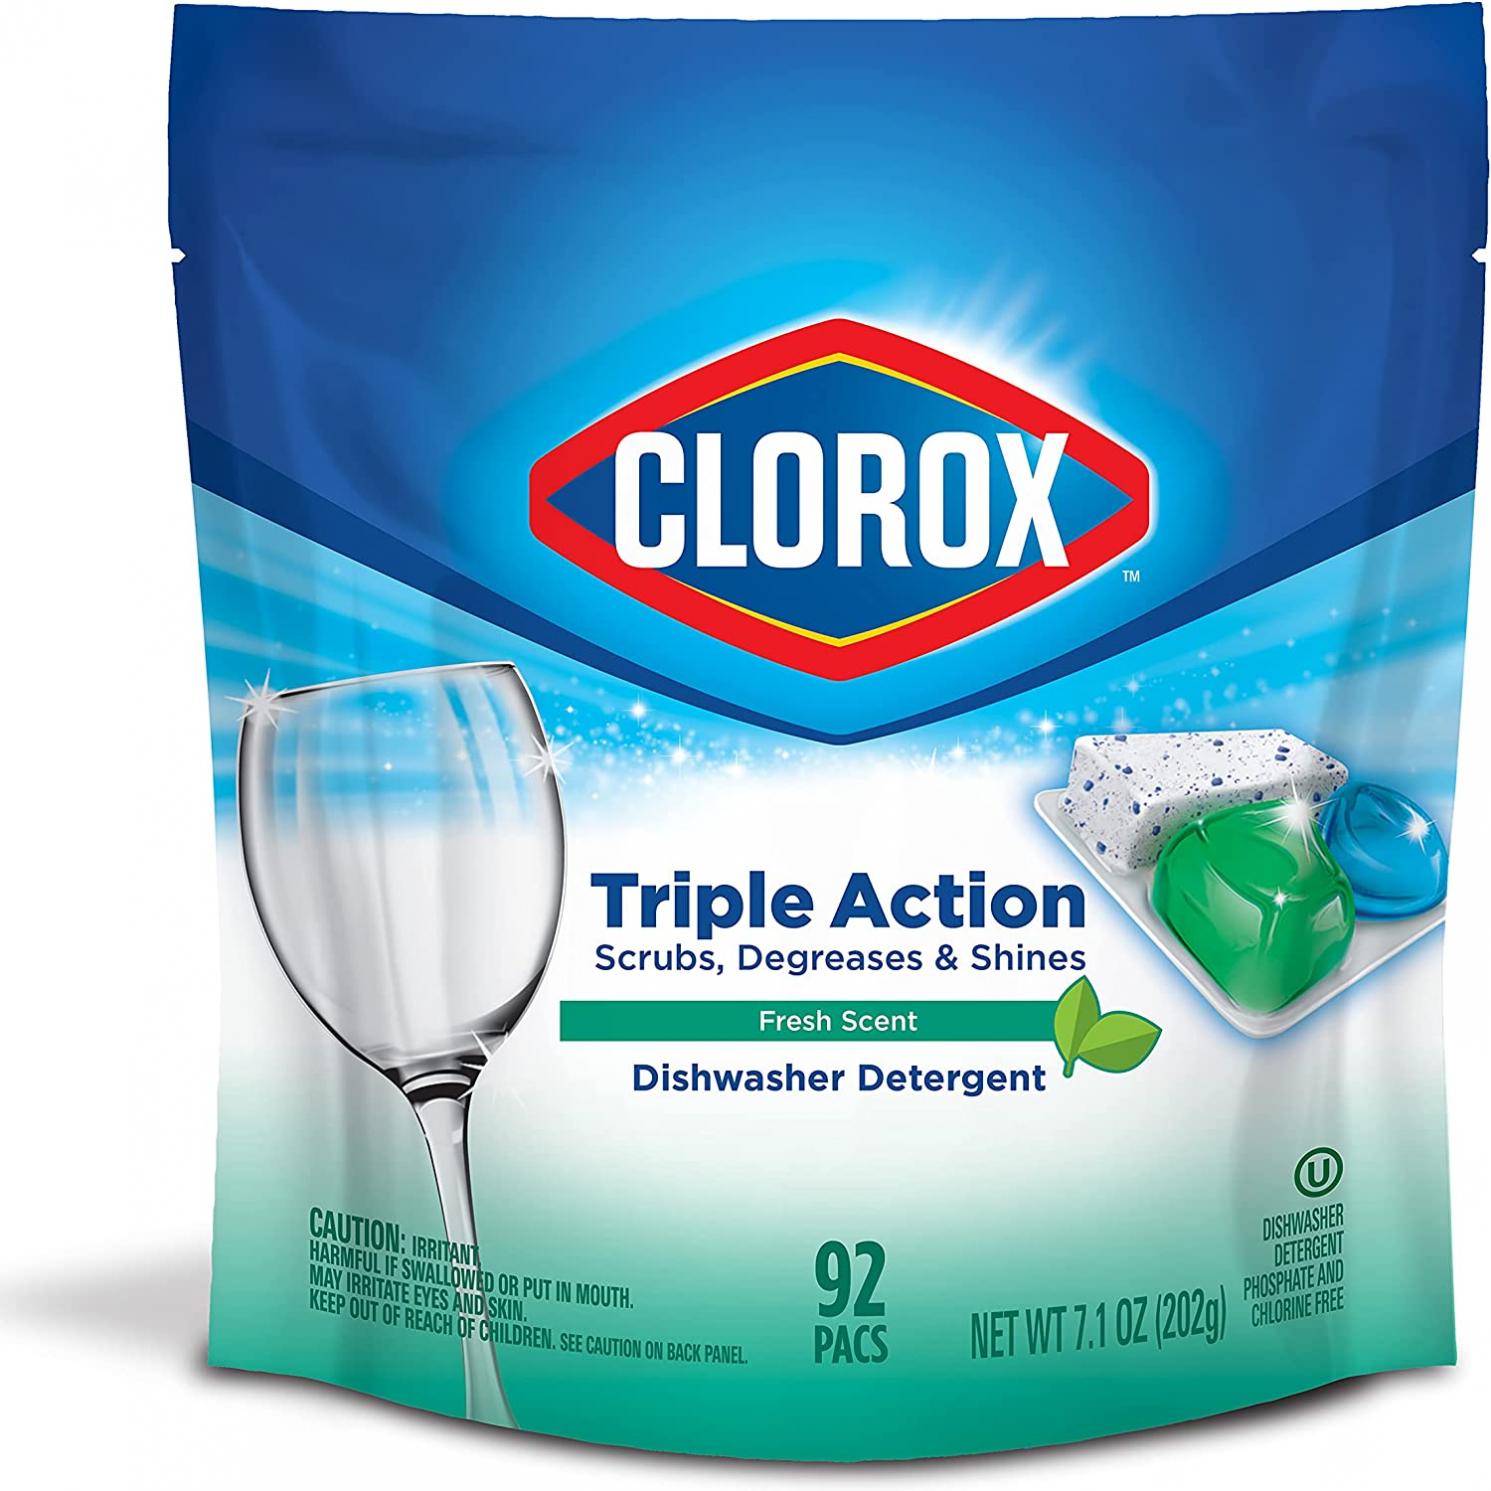 Clorox Triple Action Dishwasher Detergent Pacs, 92 Count Dishwashing Pacs, Fresh Scent